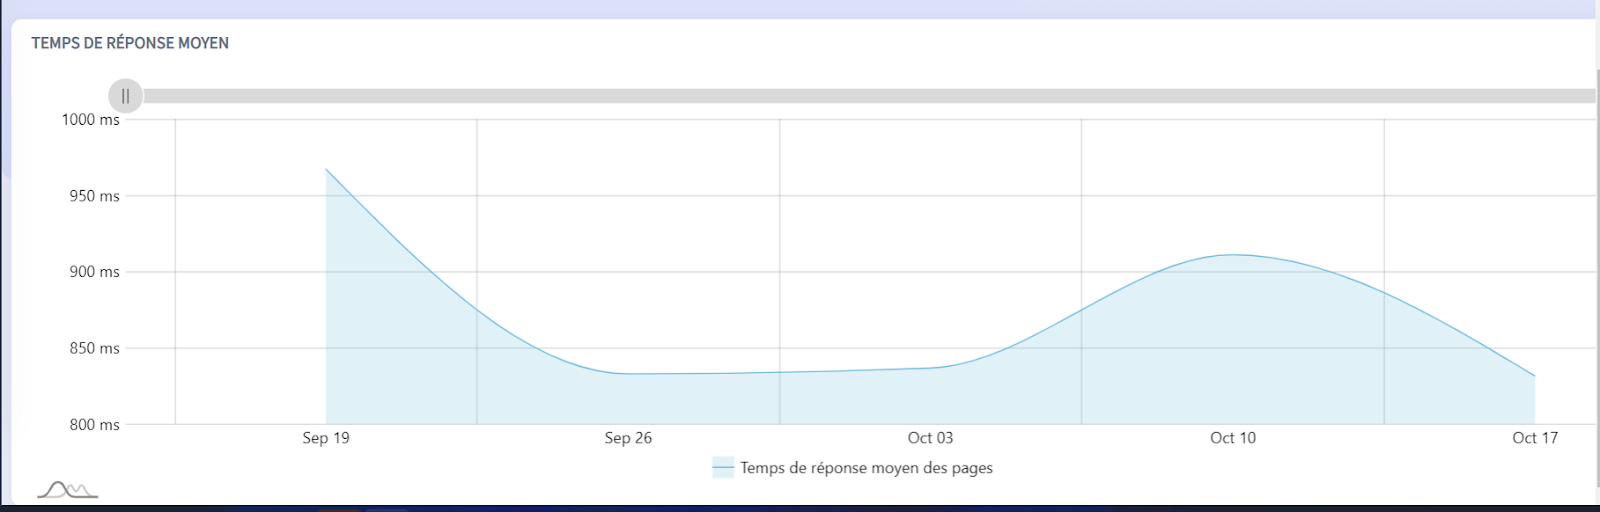 Dashboard - Widget showing average page response time